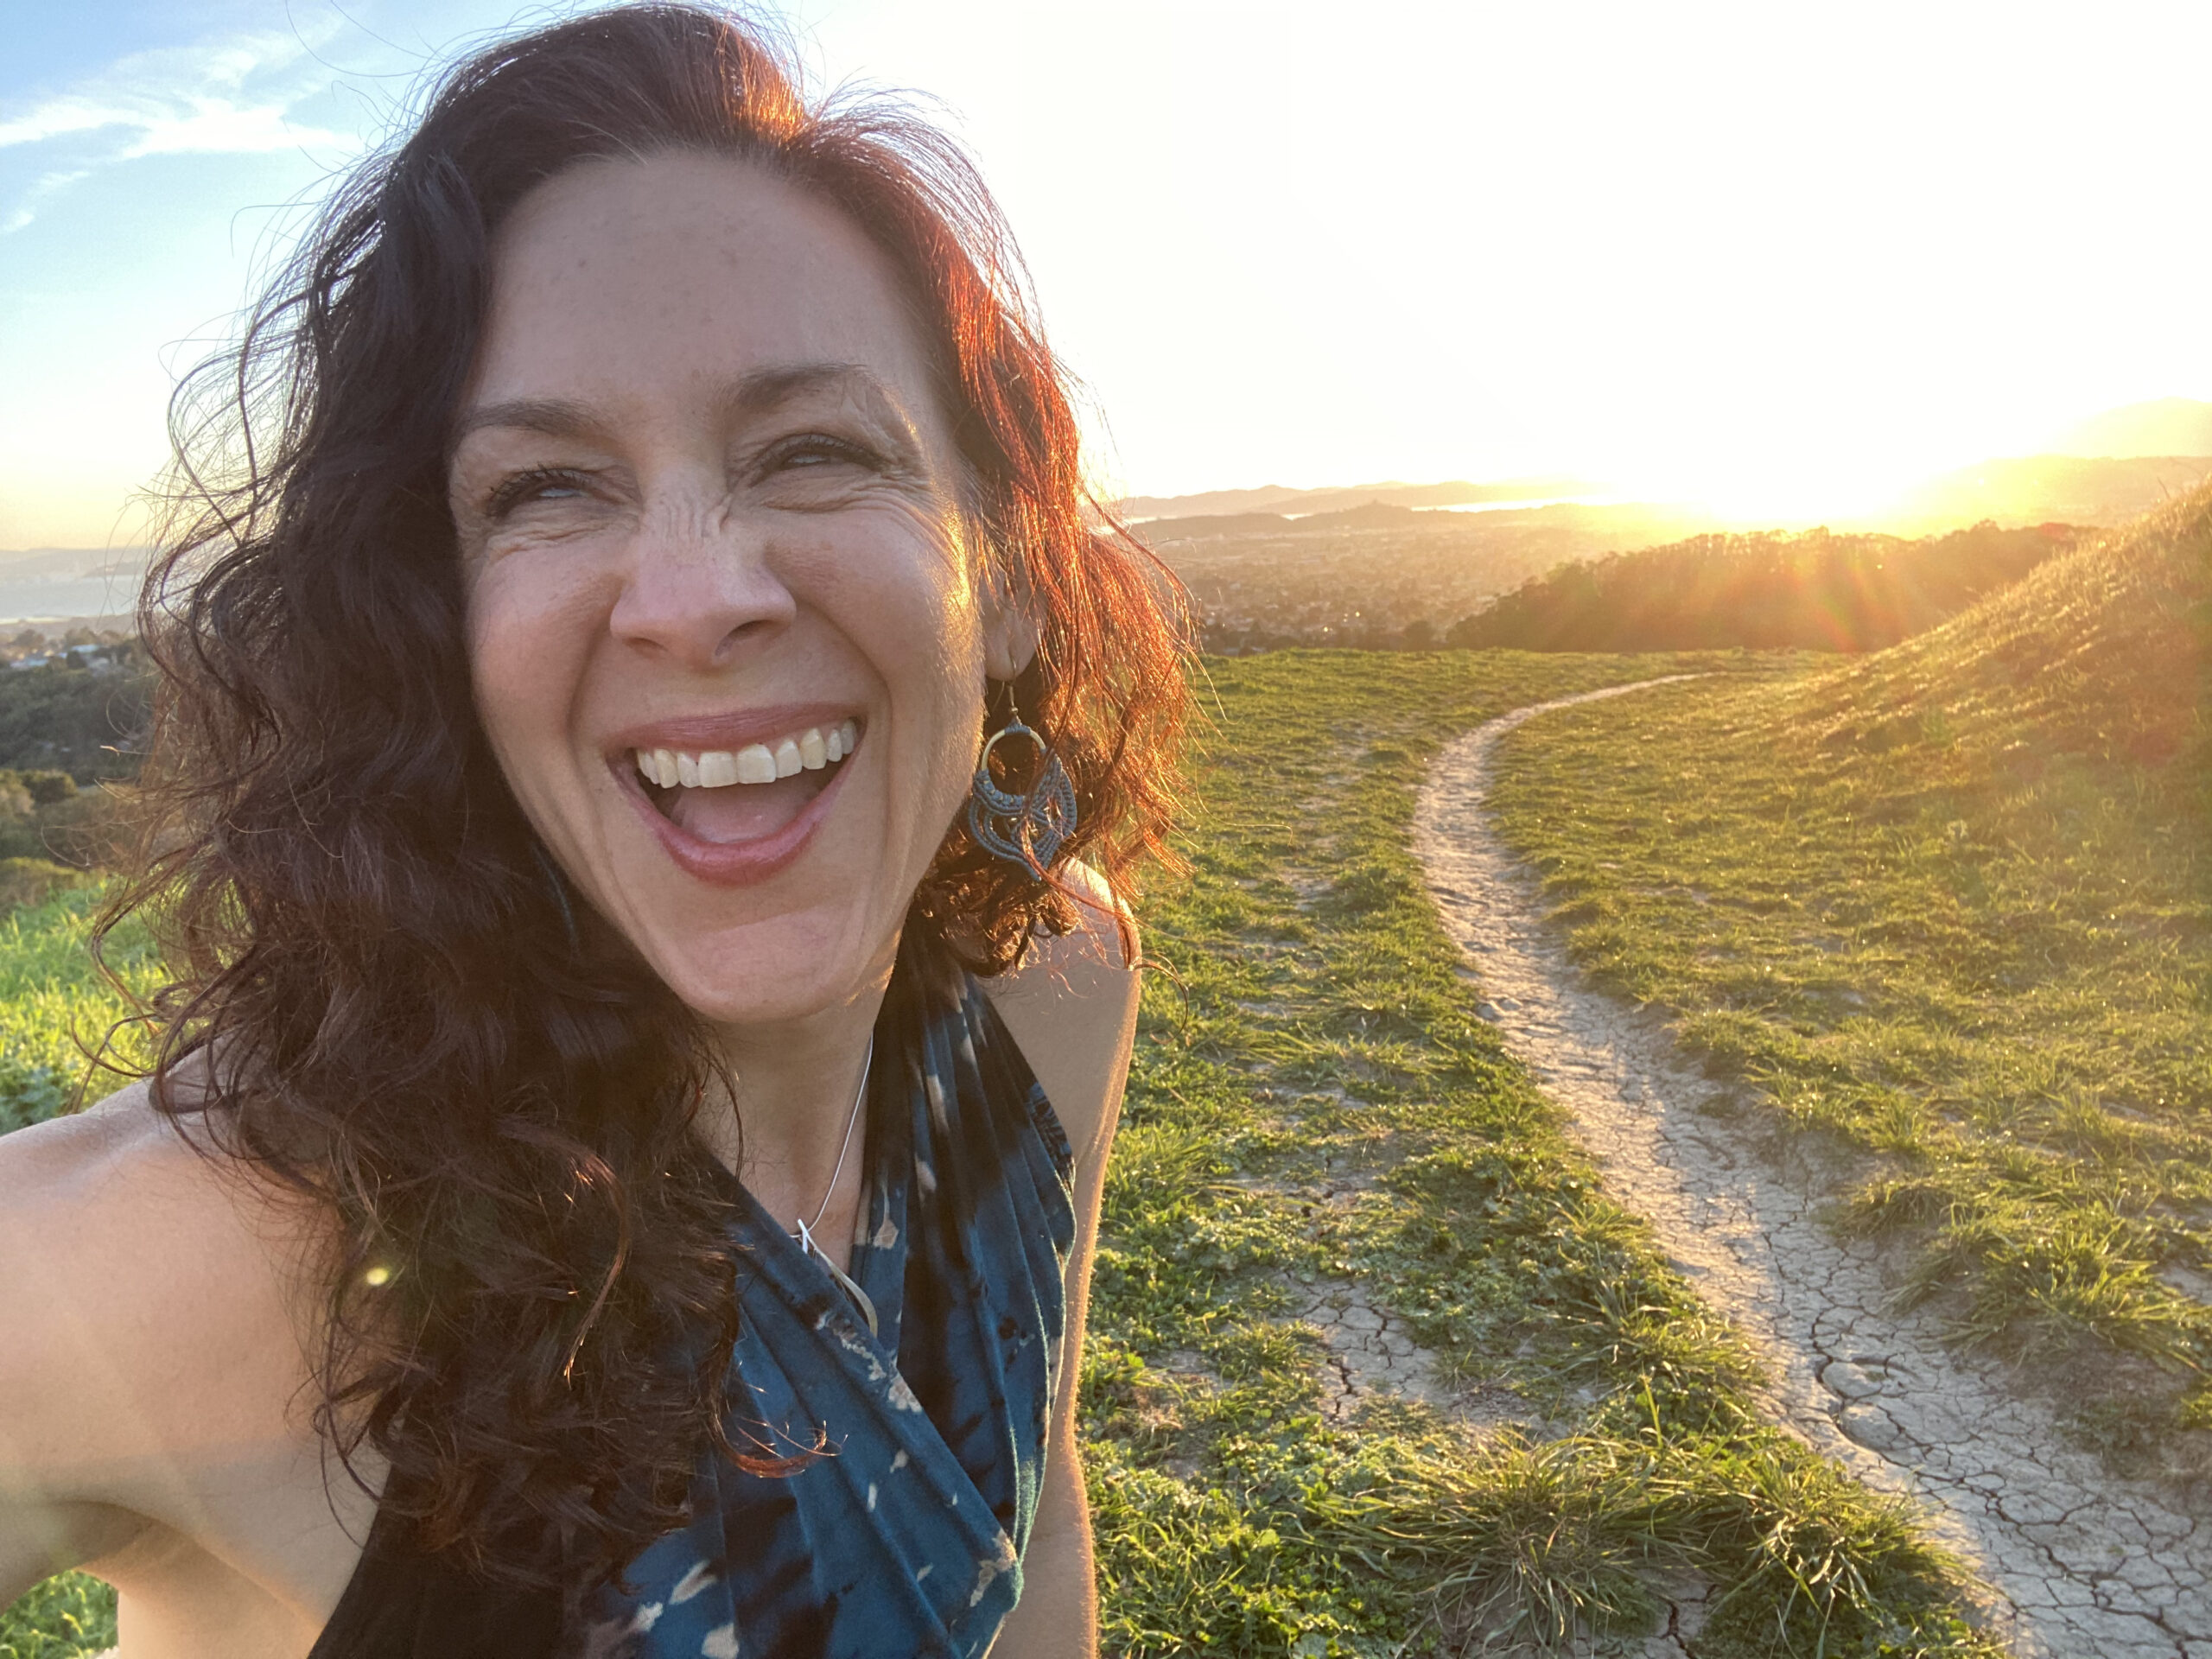 Angela Luna smiling in the fields